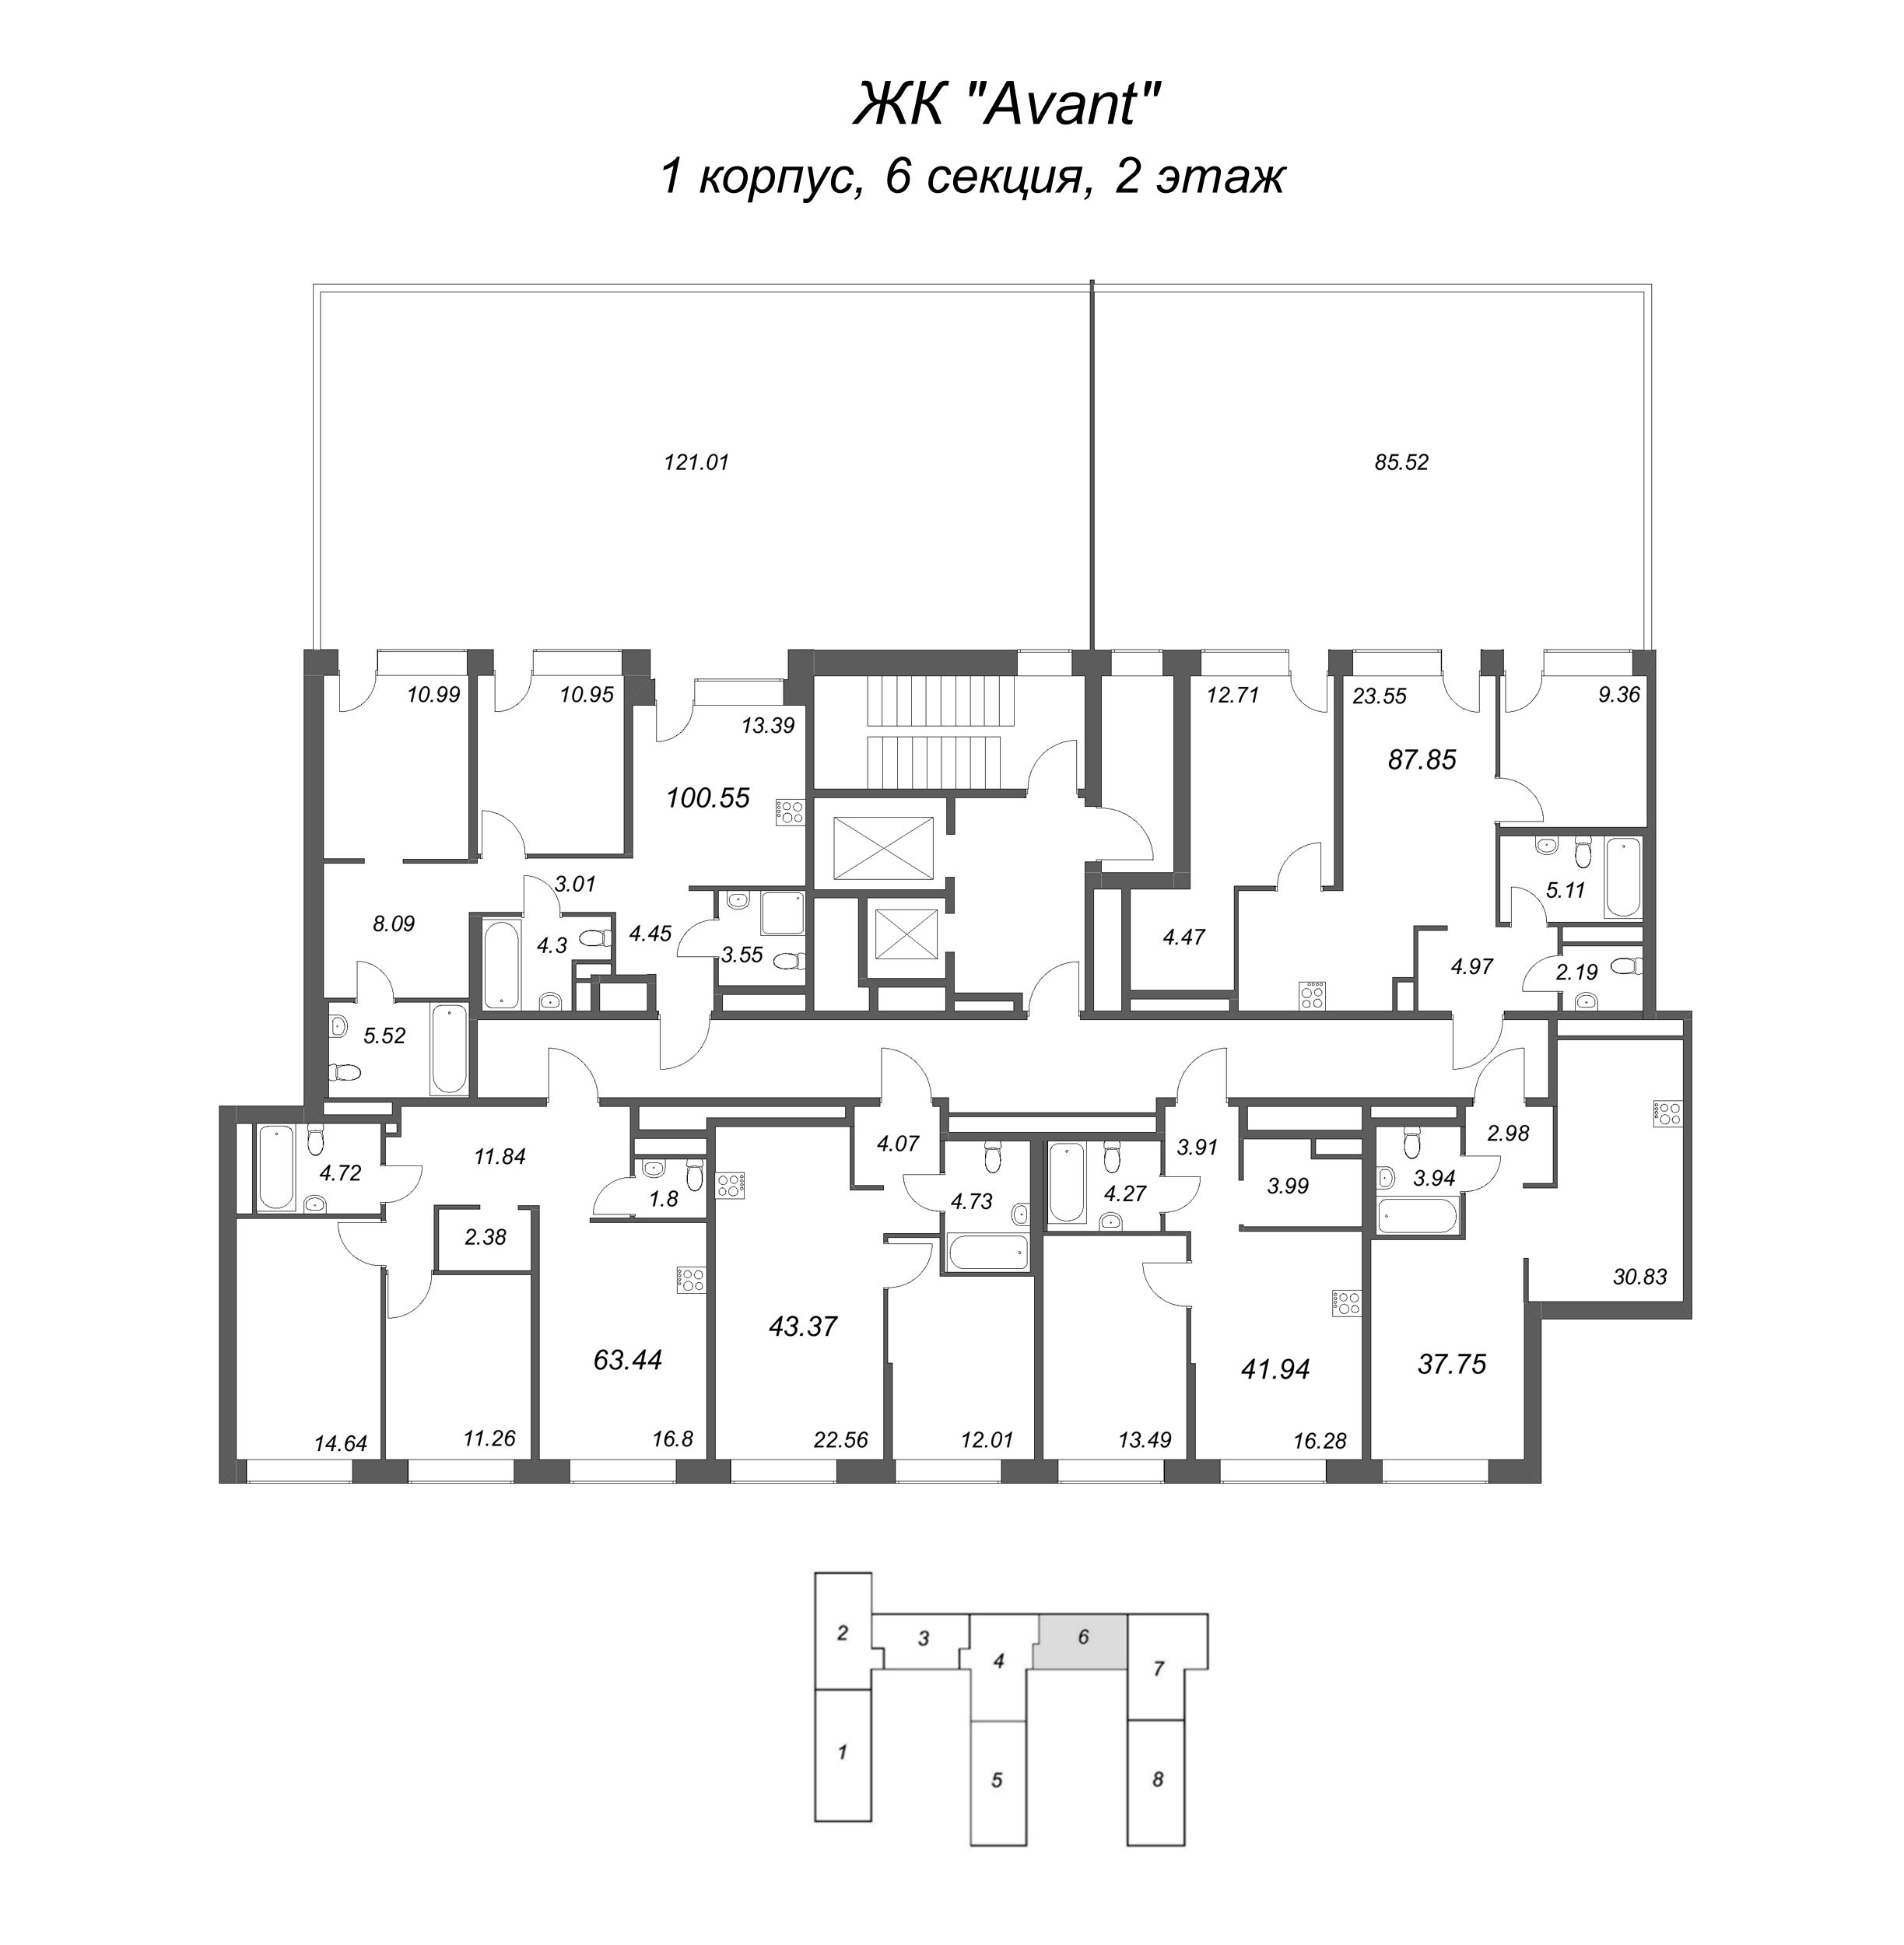 3-комнатная (Евро) квартира, 63.44 м² - планировка этажа